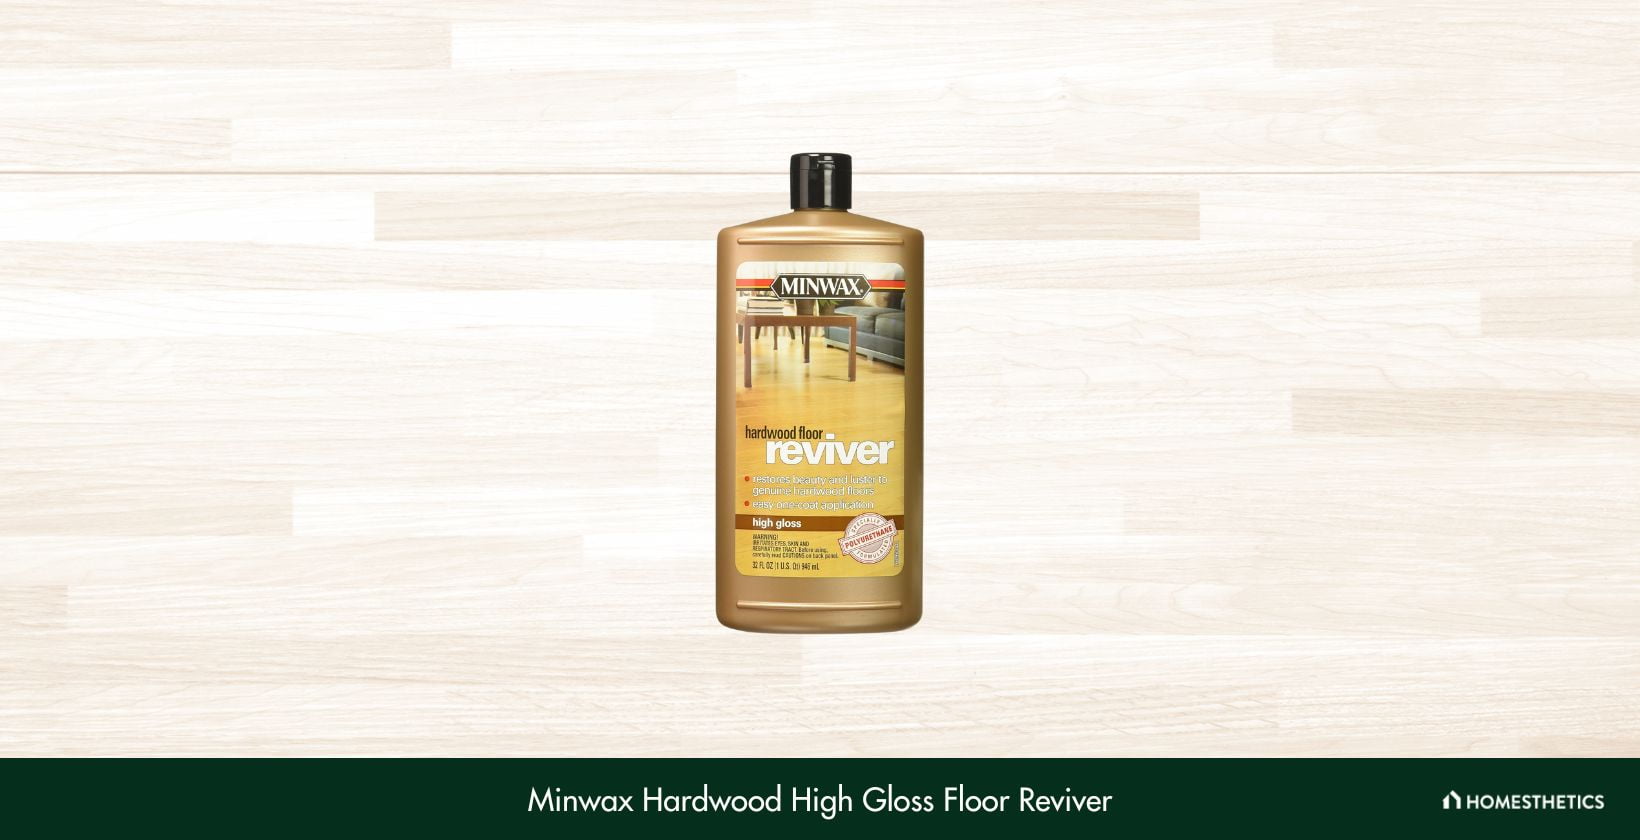 Minwax Hardwood High Gloss Floor Reviver